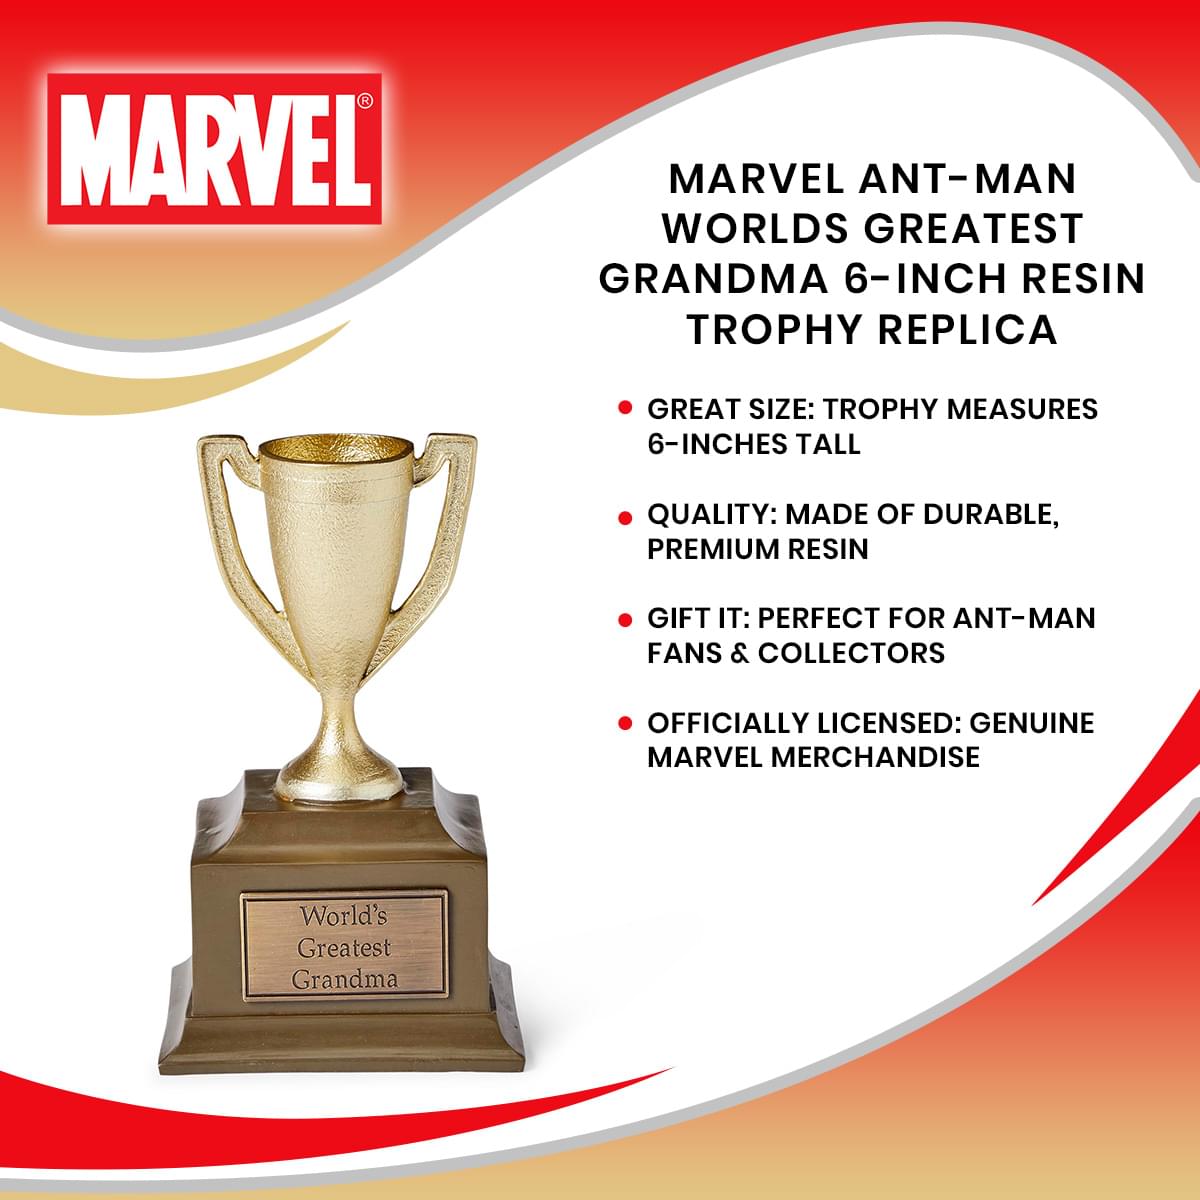 Marvel Ant-Man Worlds Greatest Grandma 6-Inch Resin Trophy Replica